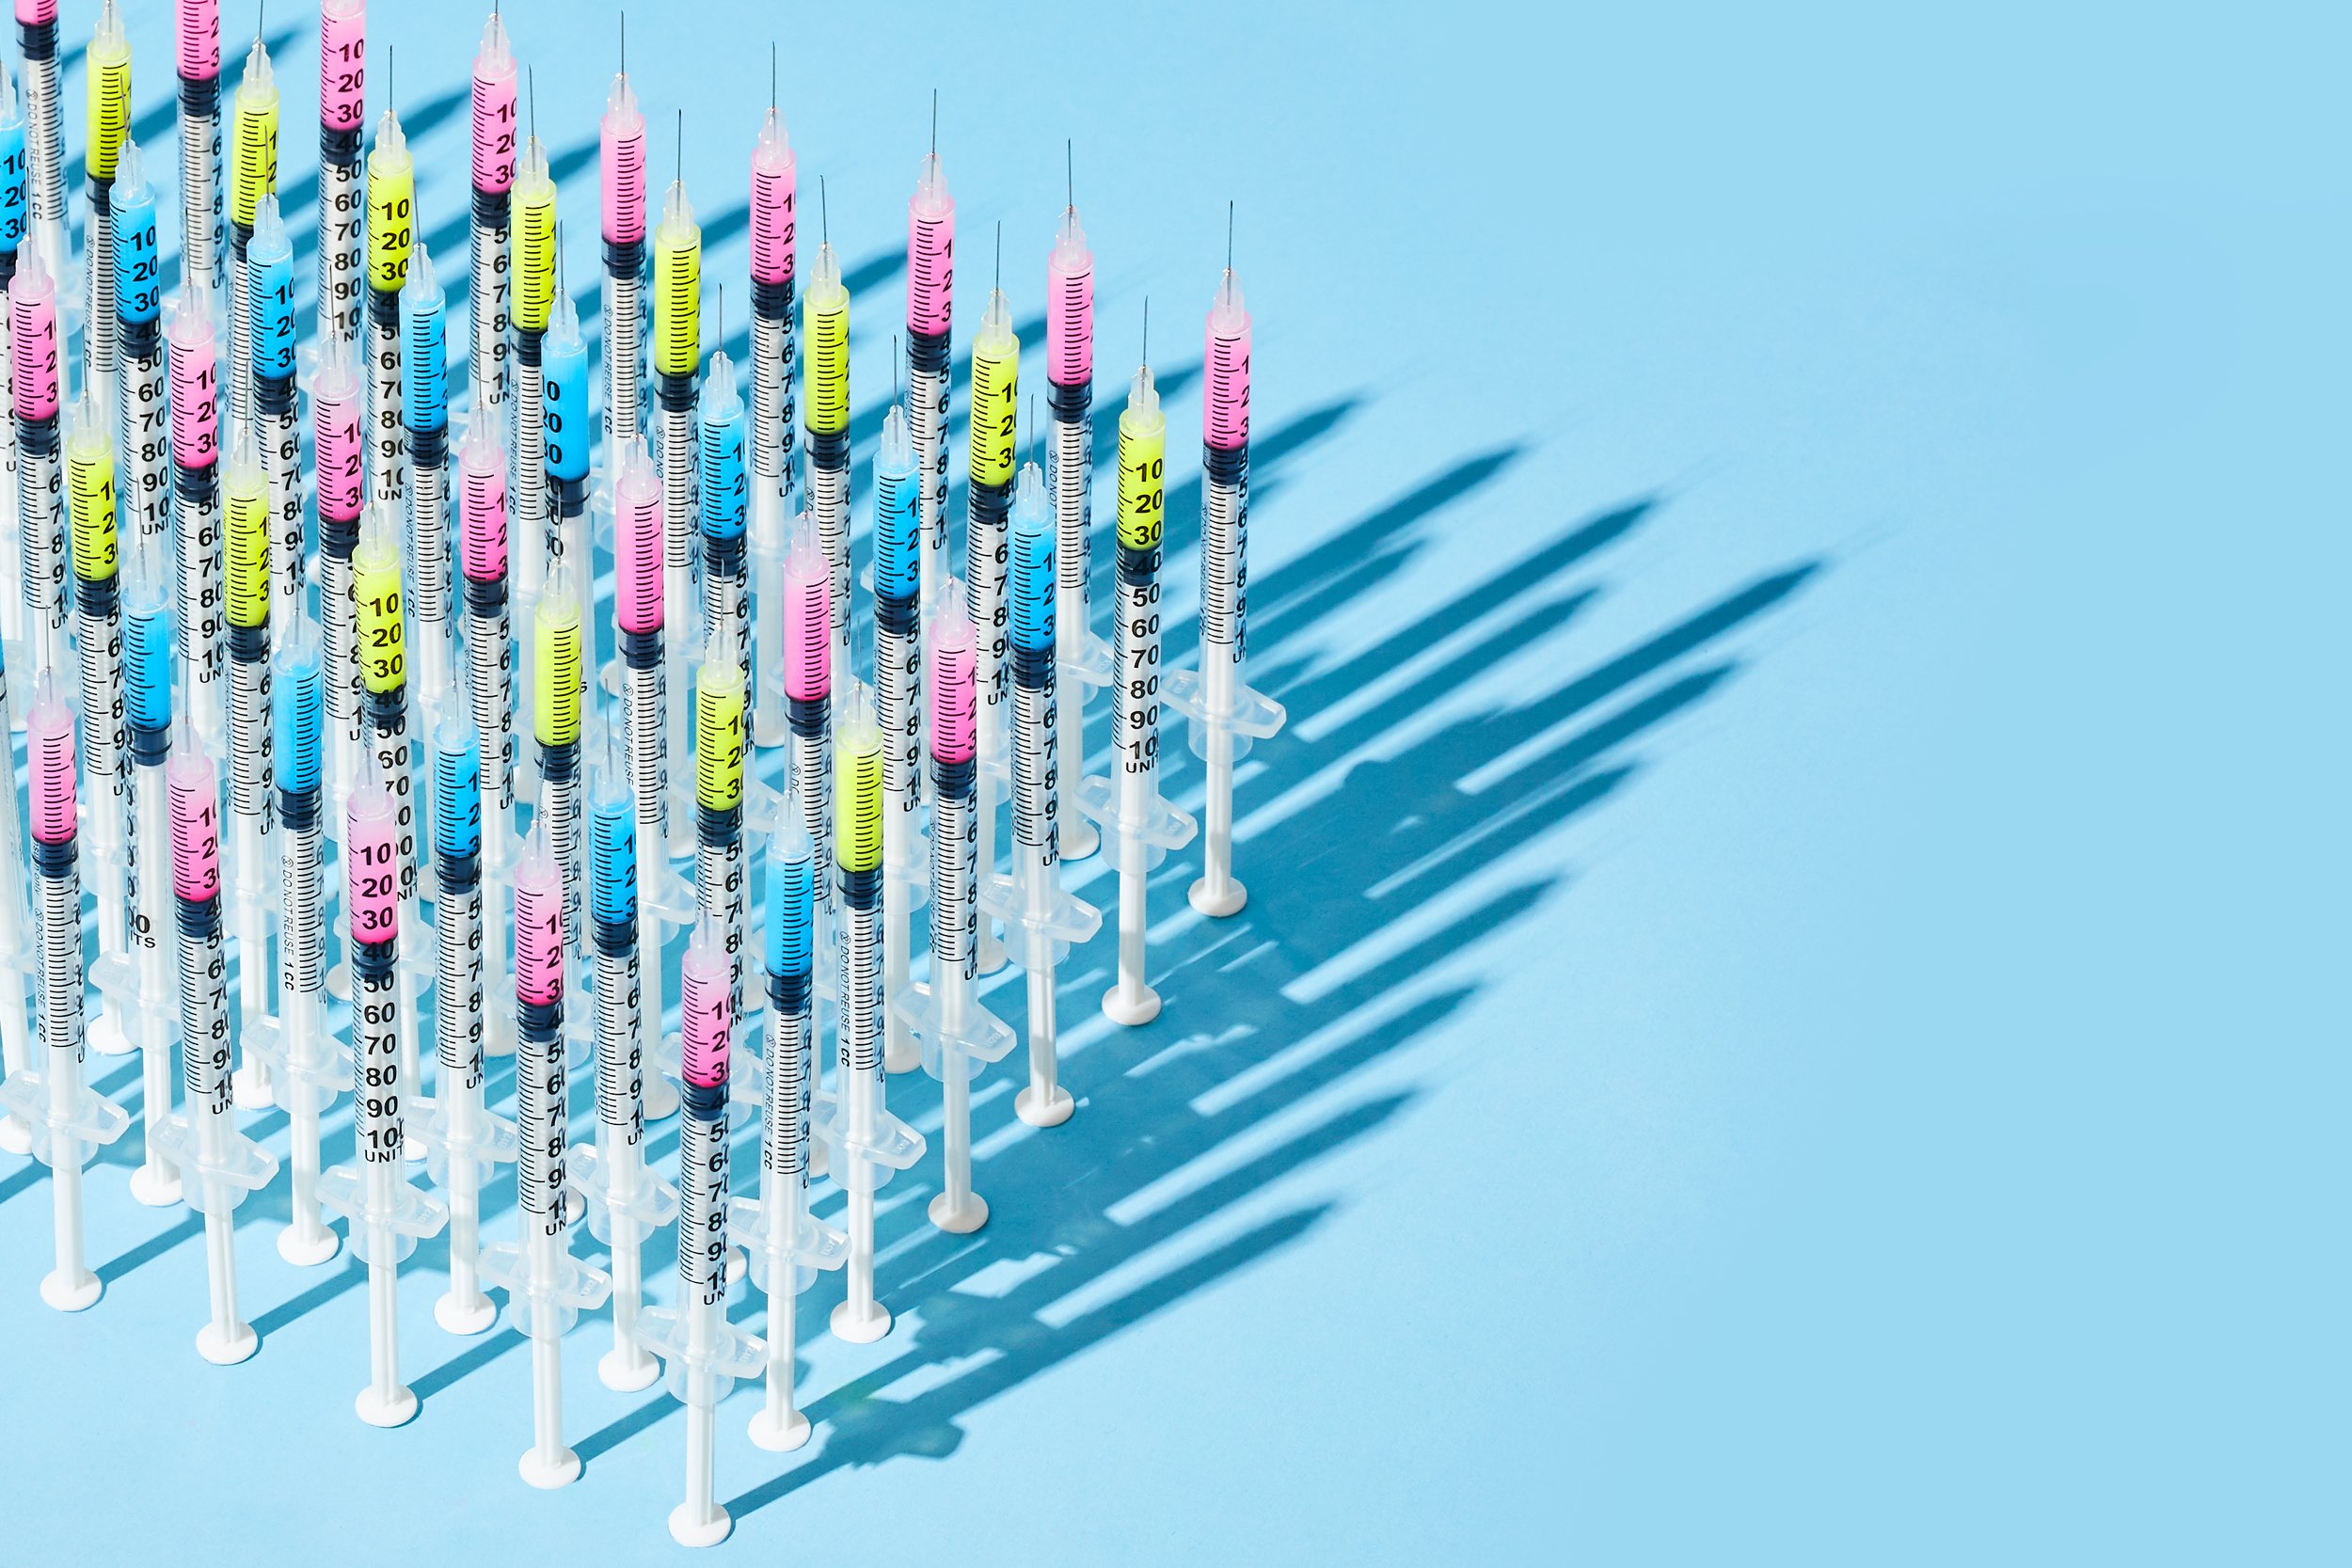 tidepool-BEAM-dan-simmons-vaccine-color-medical-syringes.jpeg